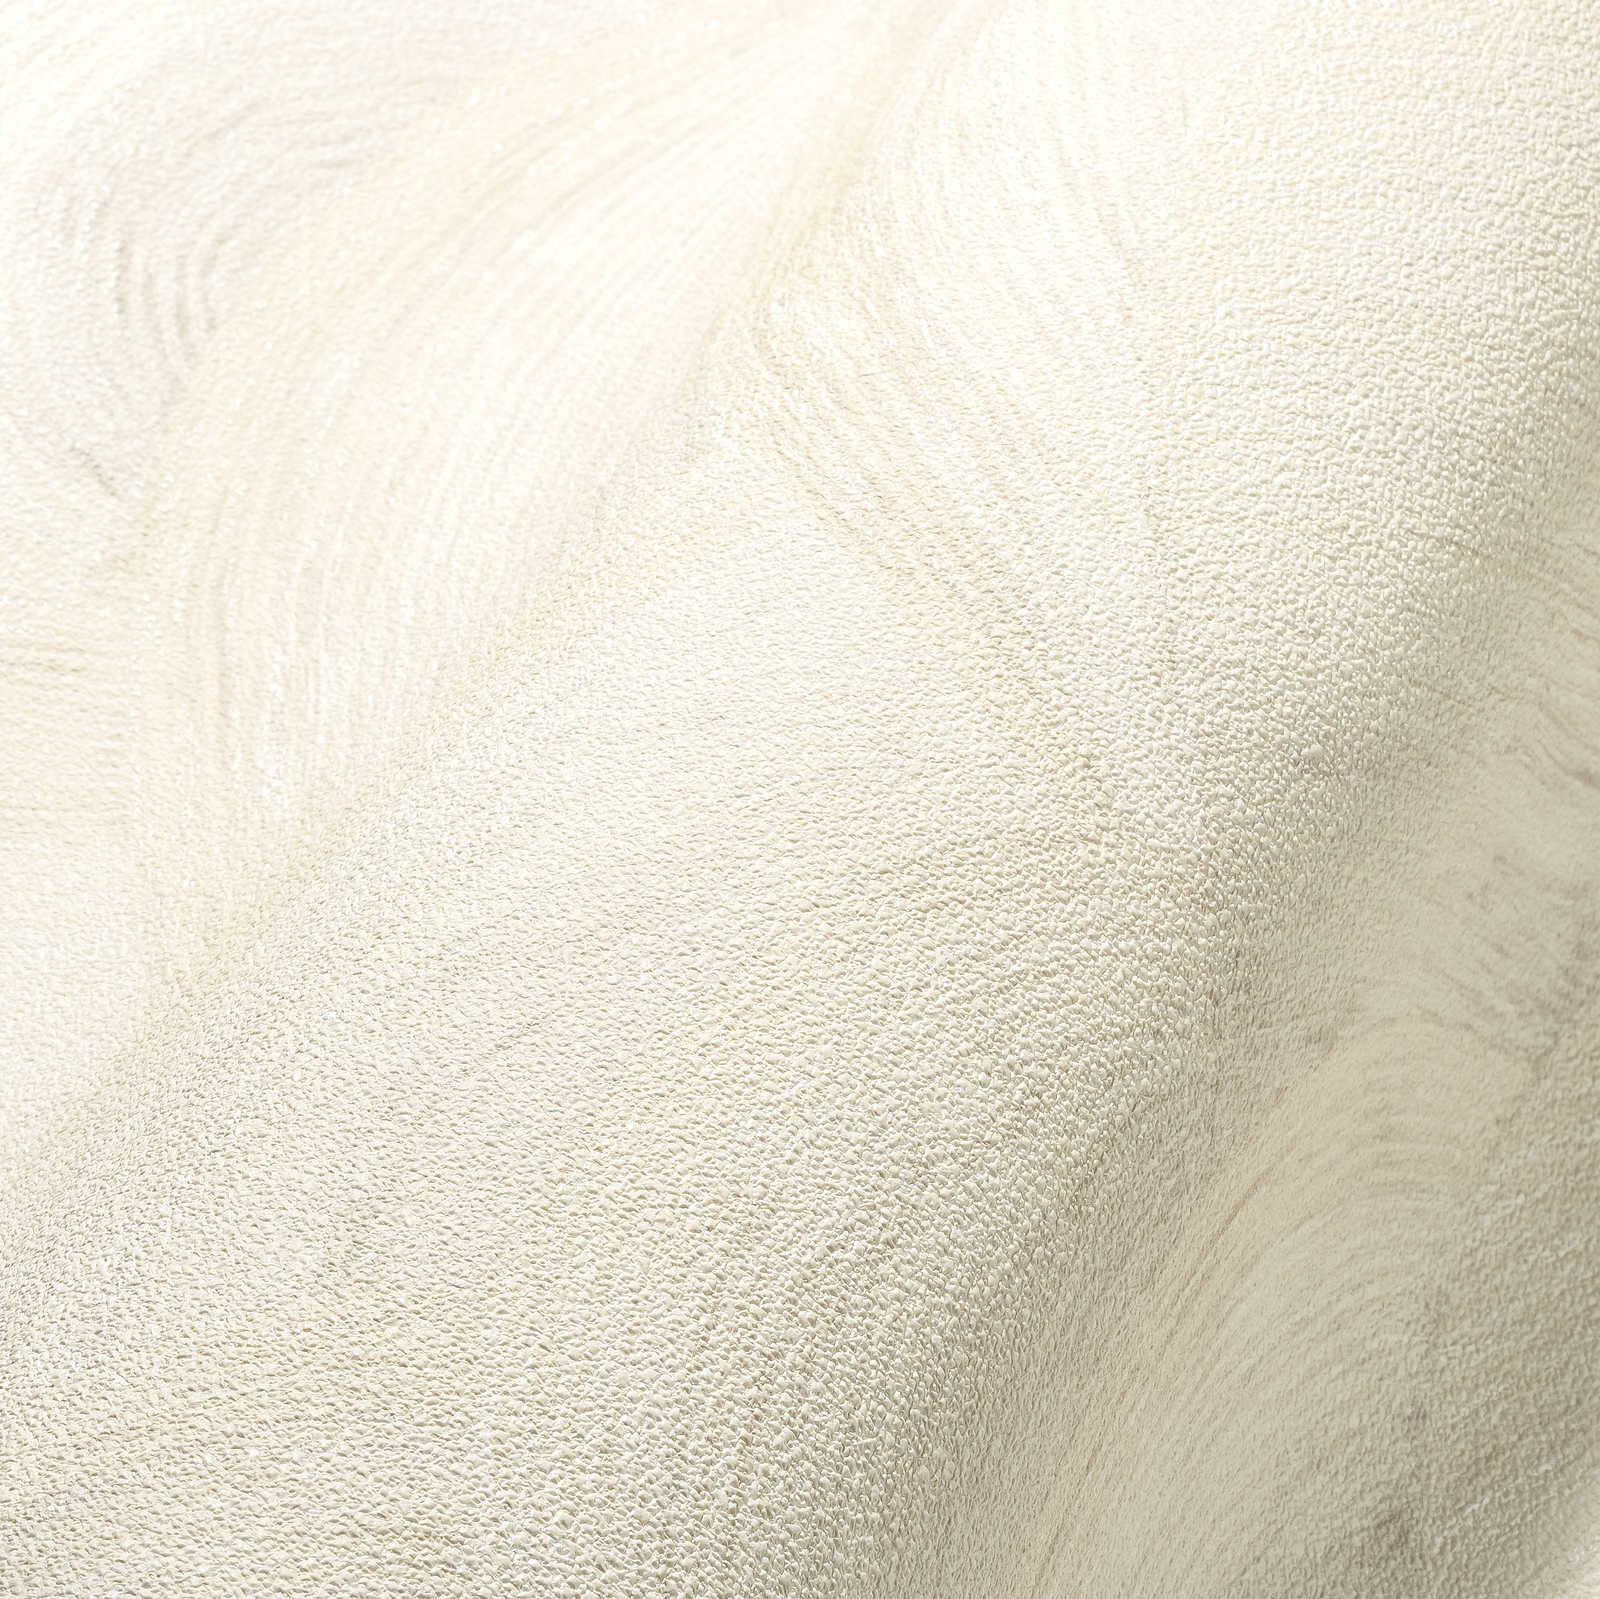             Papel pintado no tejido con sutil motivo ondulado - blanco, crema, gris
        